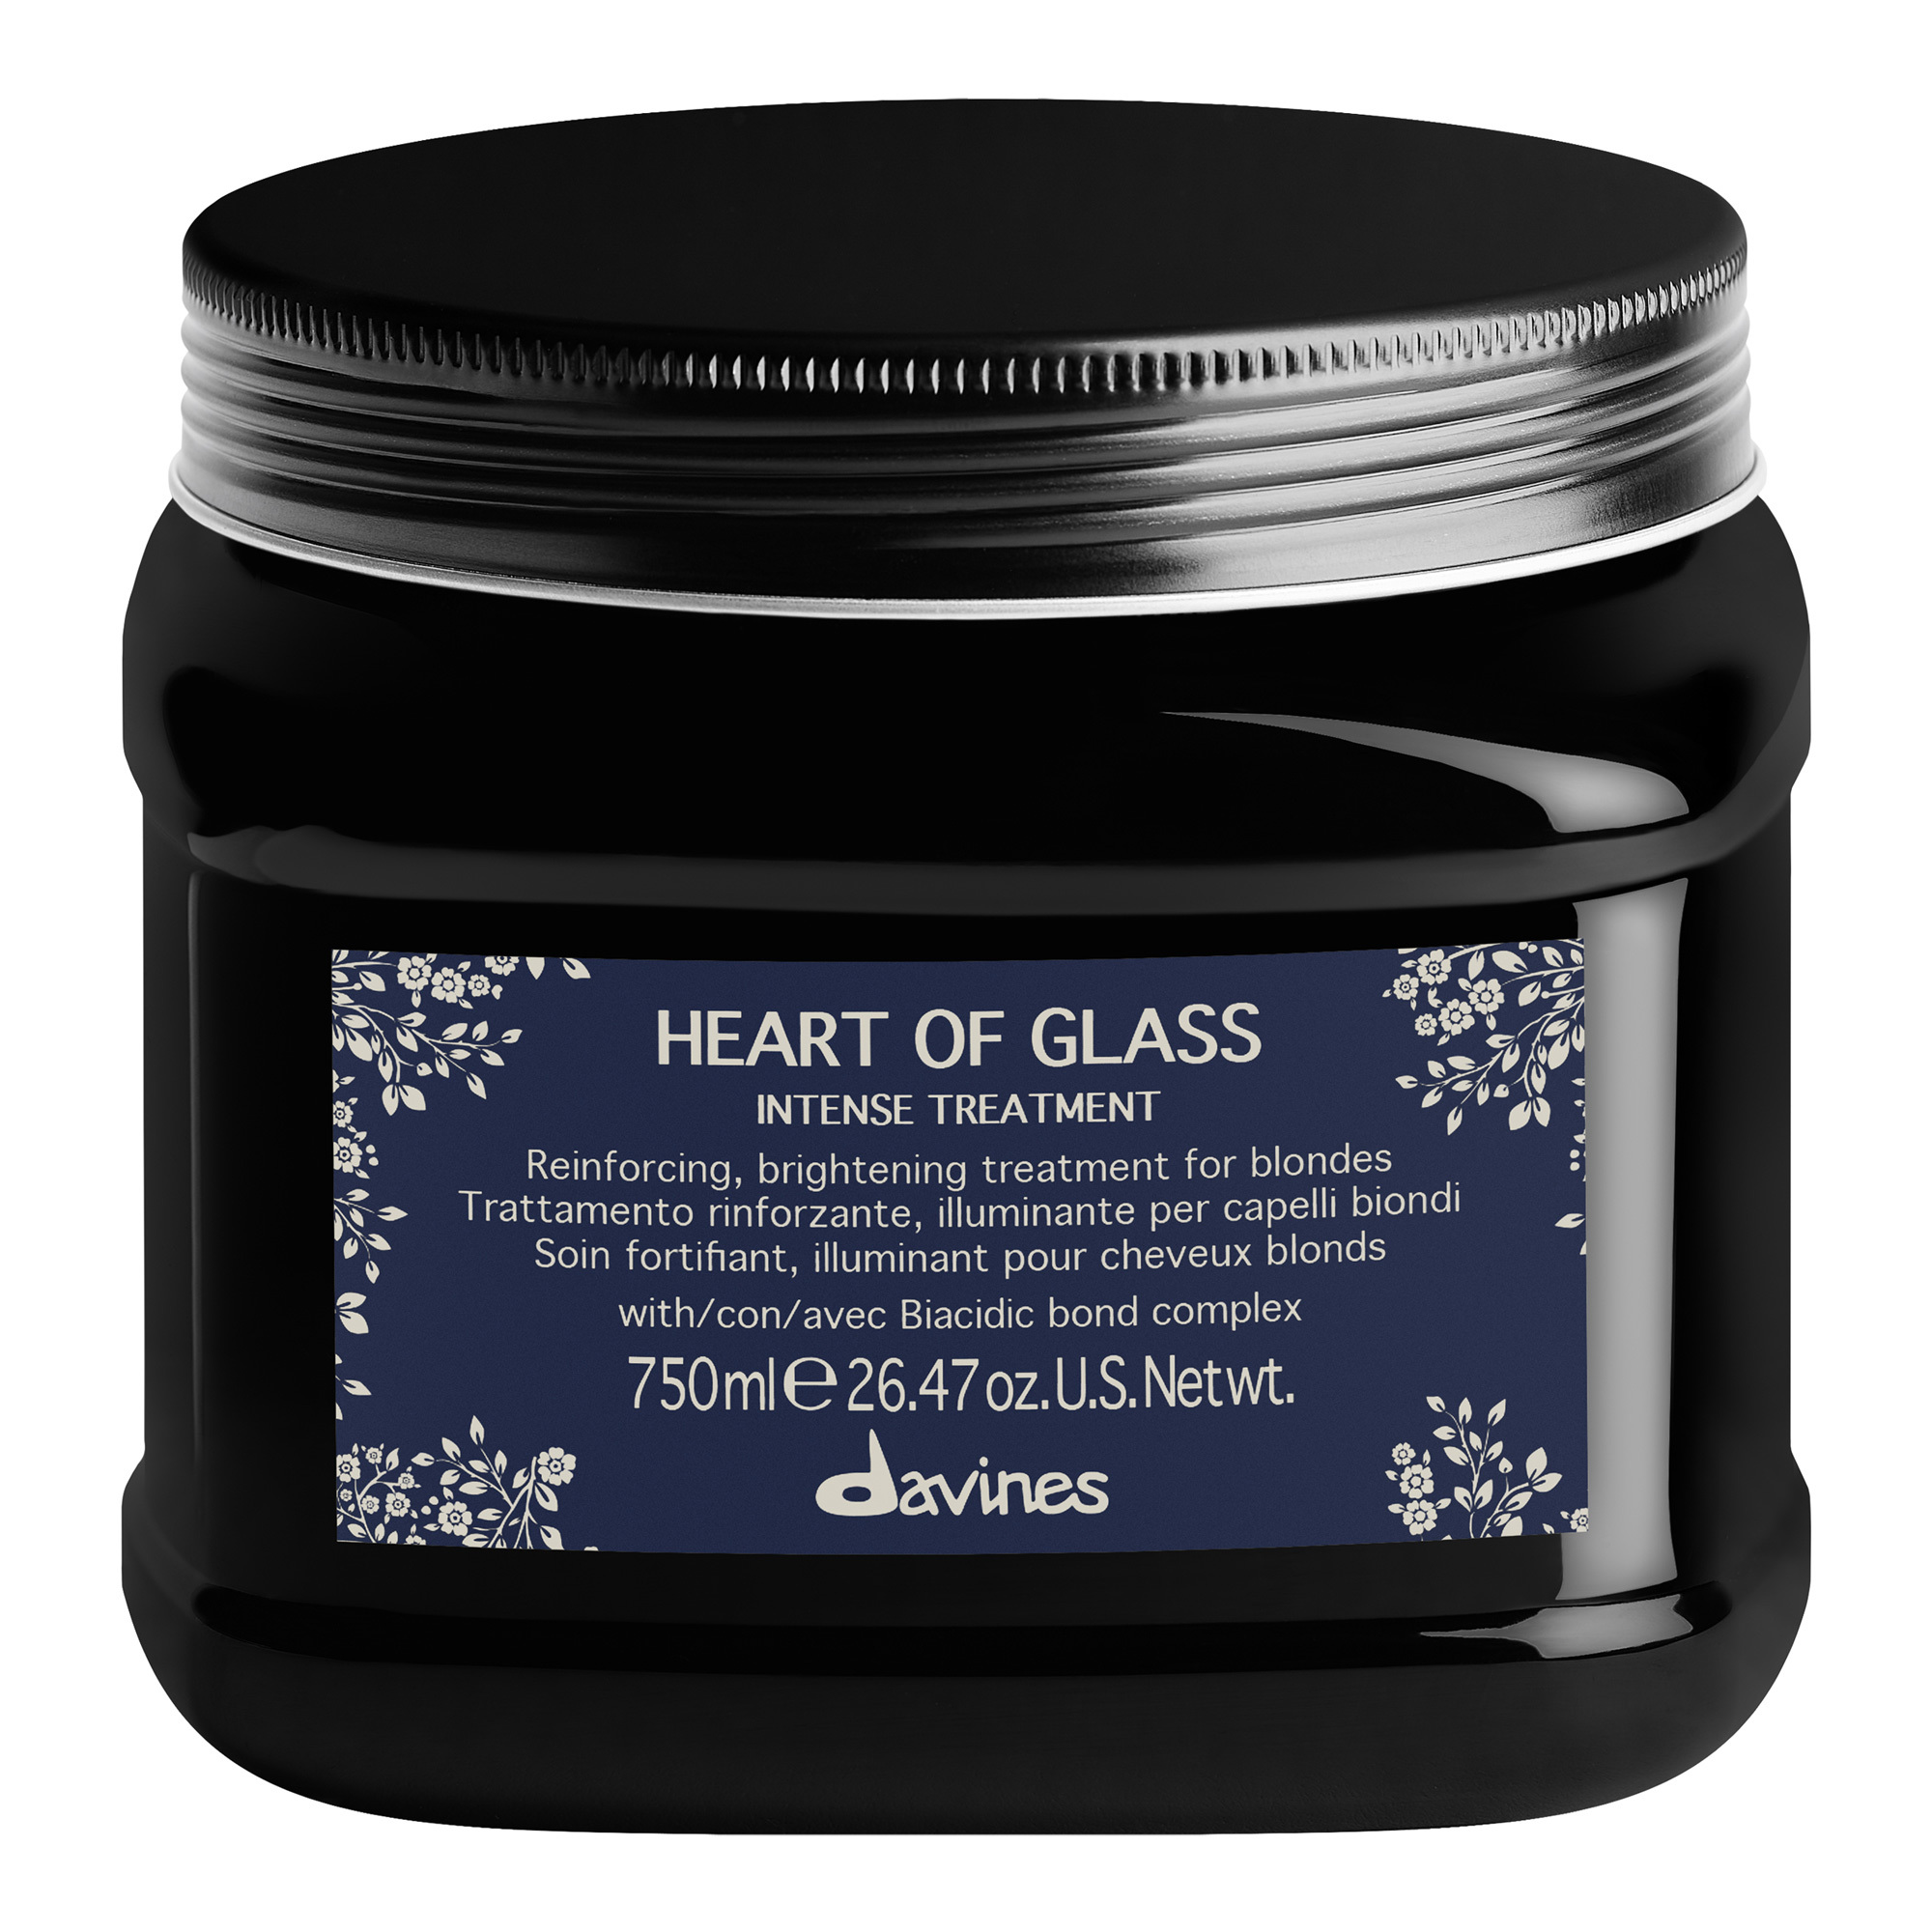 Davines Heart of Glass Intense Treatment 26.47oz